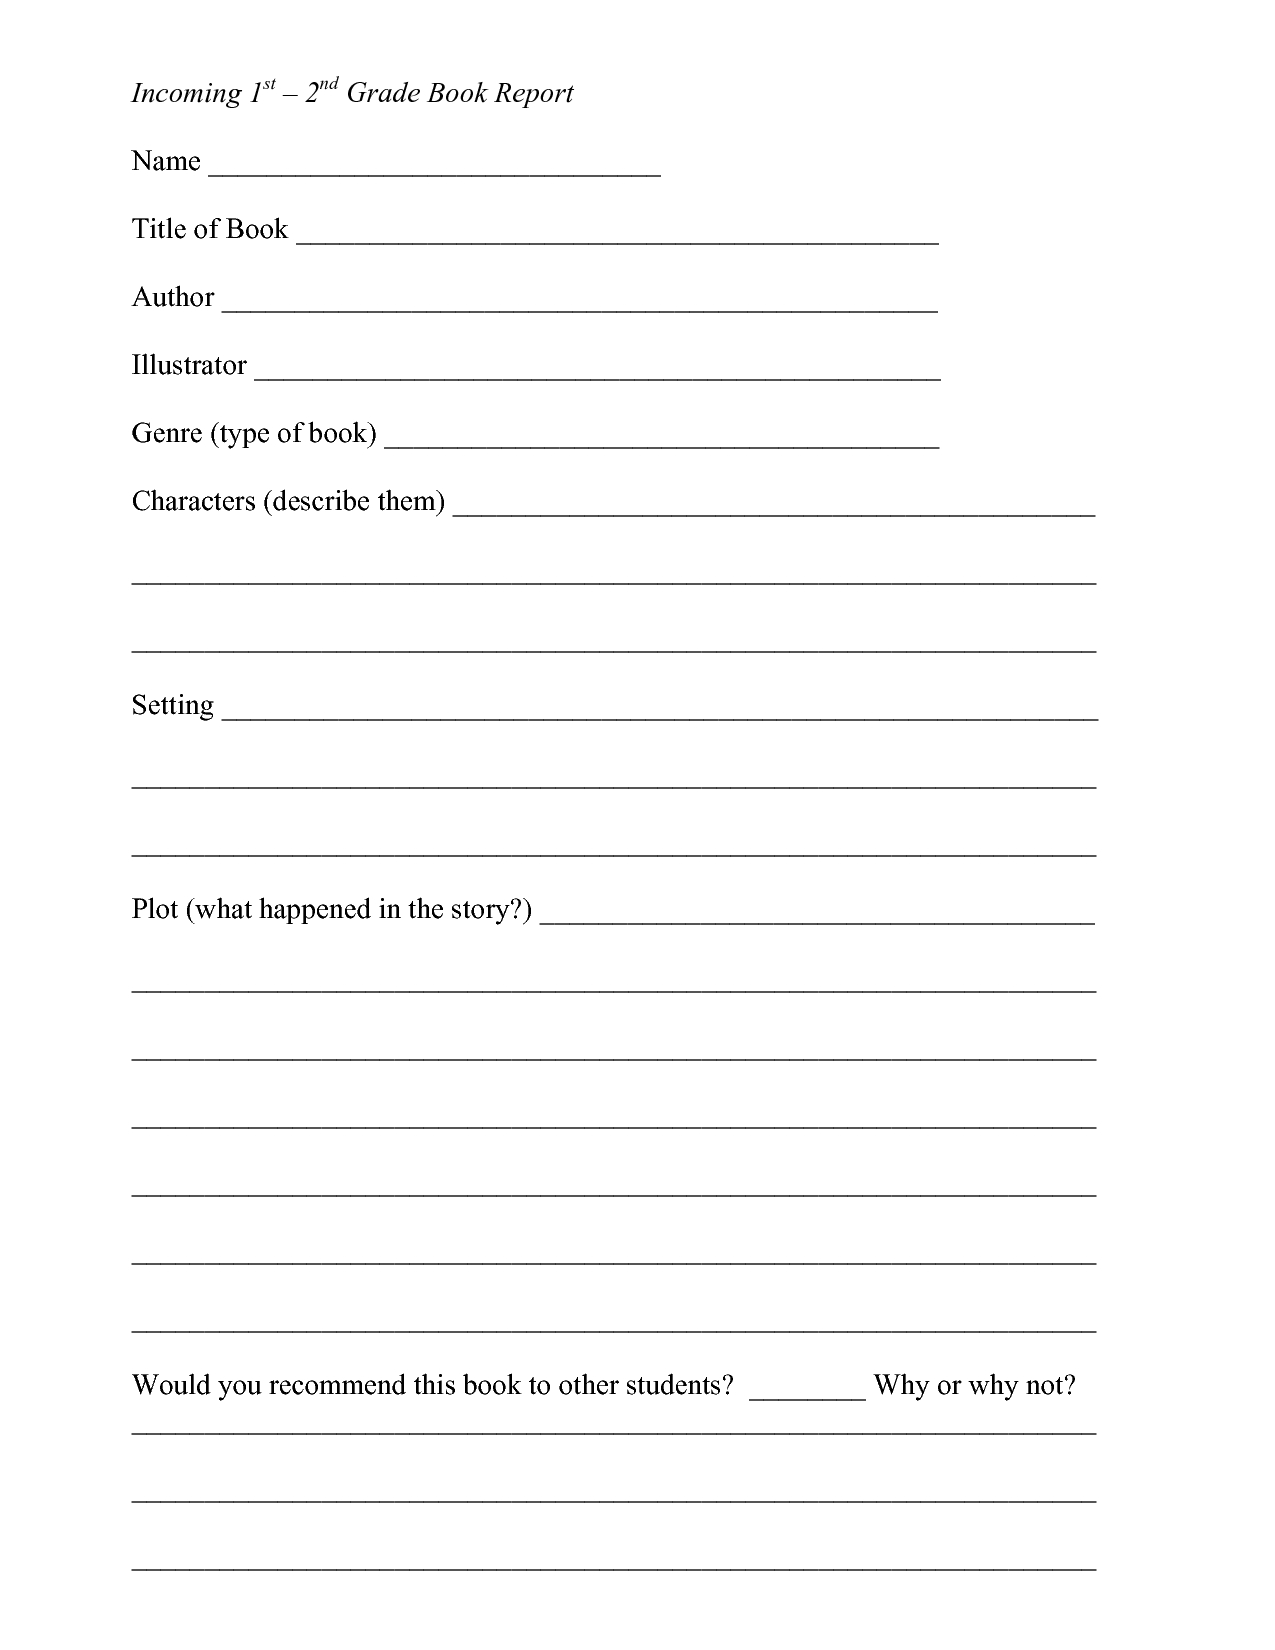 Book Report Template 2Nd Grade Free – Book Report Form For Book Report Template 5Th Grade